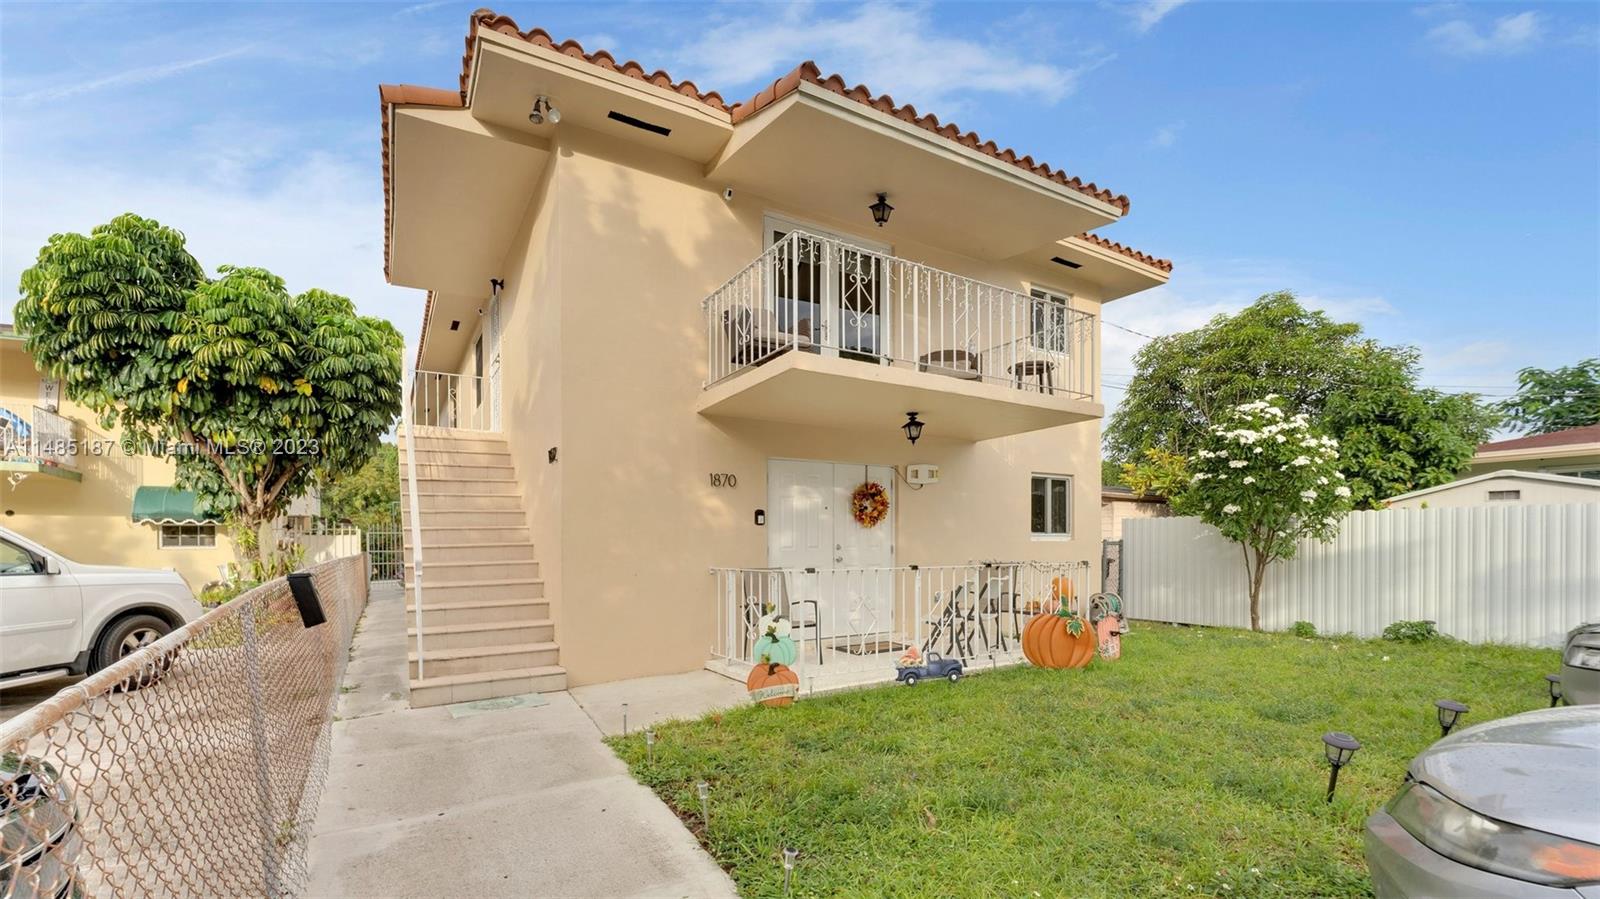 Rental Property at 1870 Curtiss Dr, Hialeah, Miami-Dade County, Florida -  - $915,000 MO.